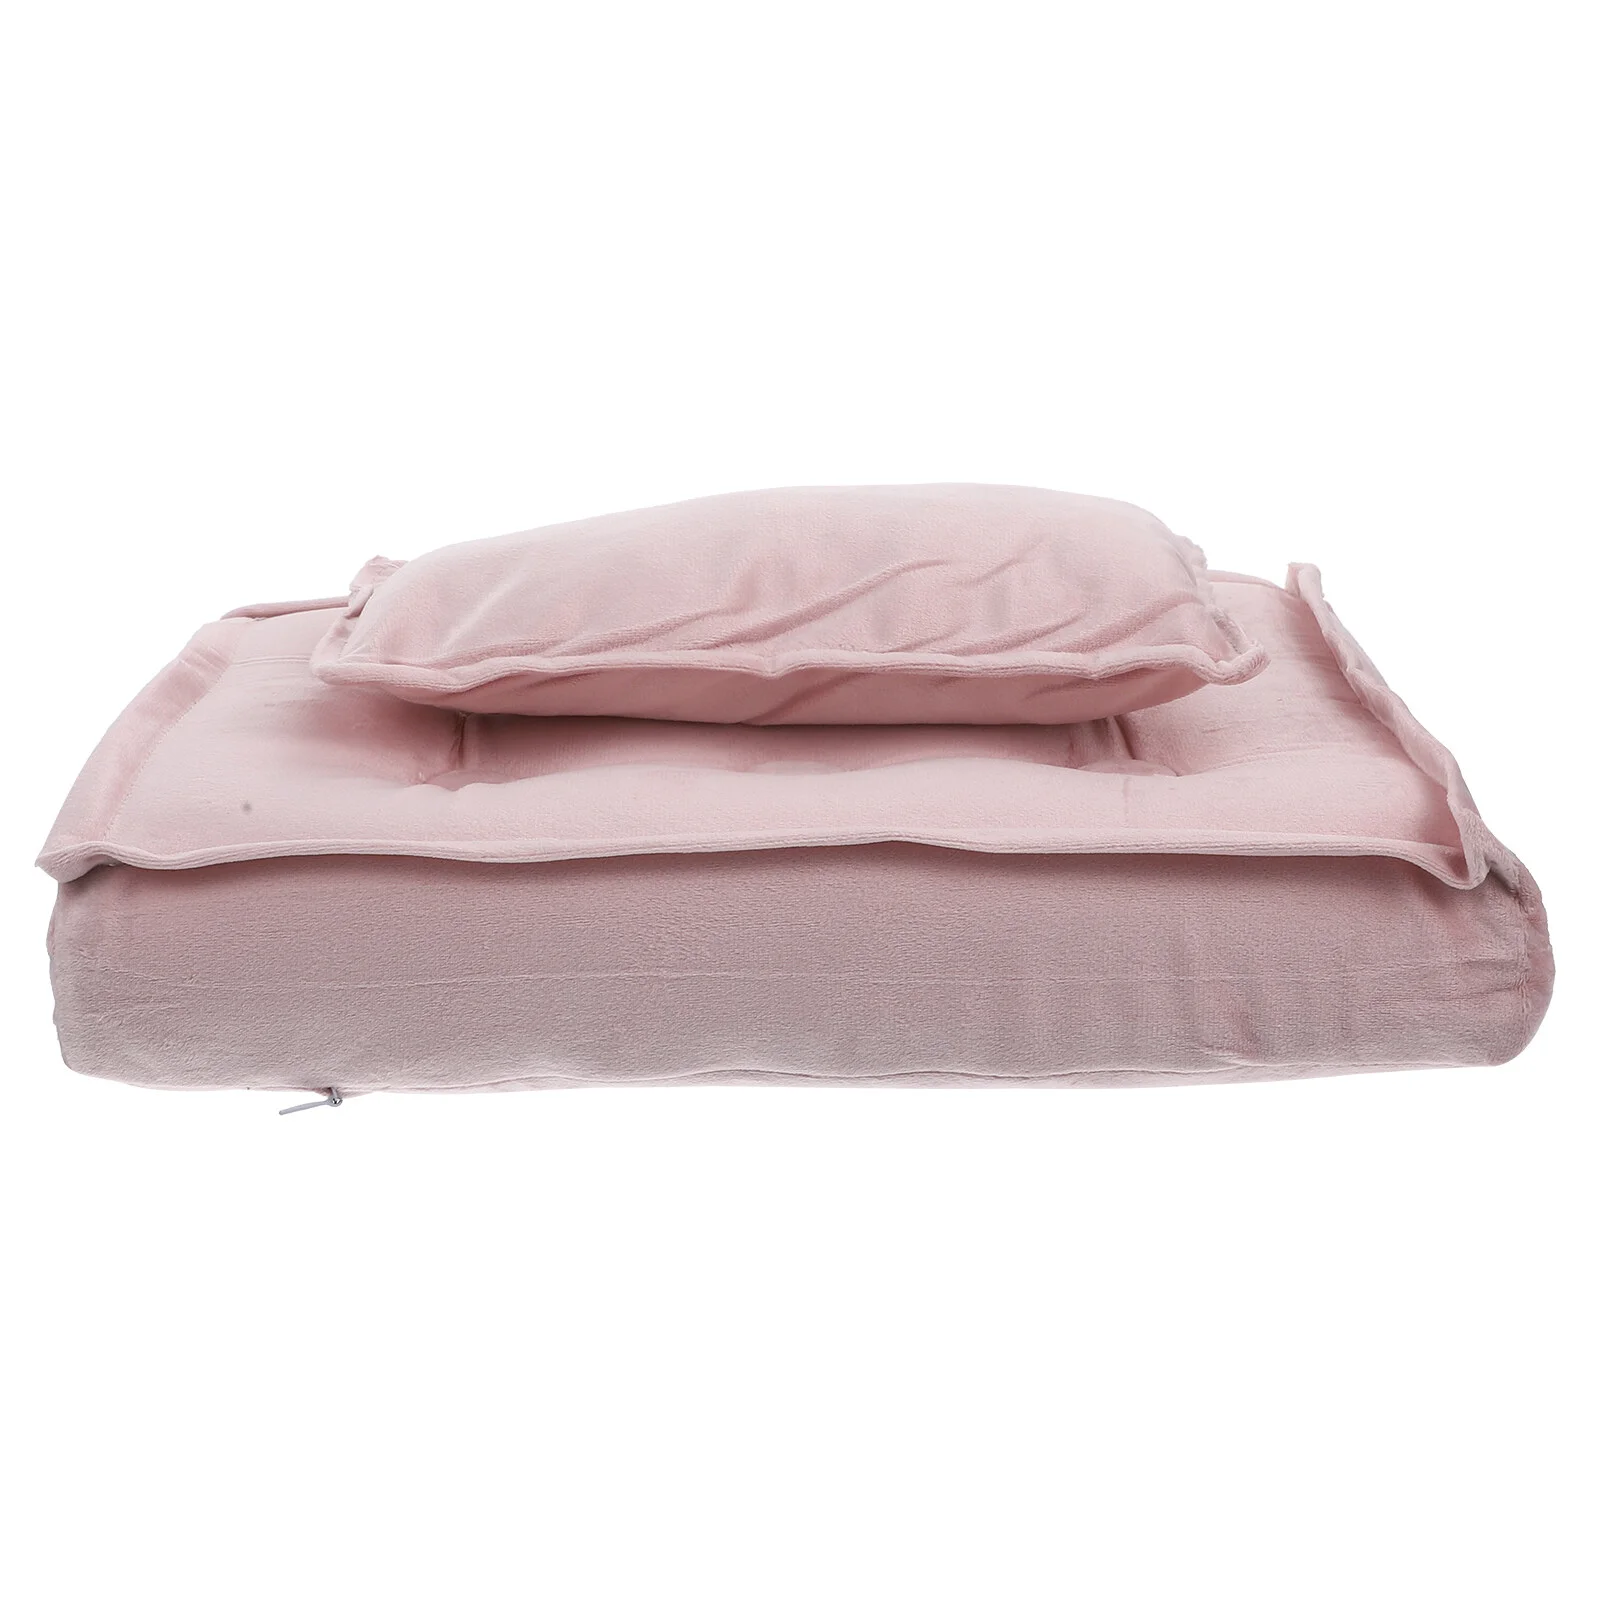 

Children's Bed Decorative Photography Props Baby Newborn Mattress Modeling Pillow